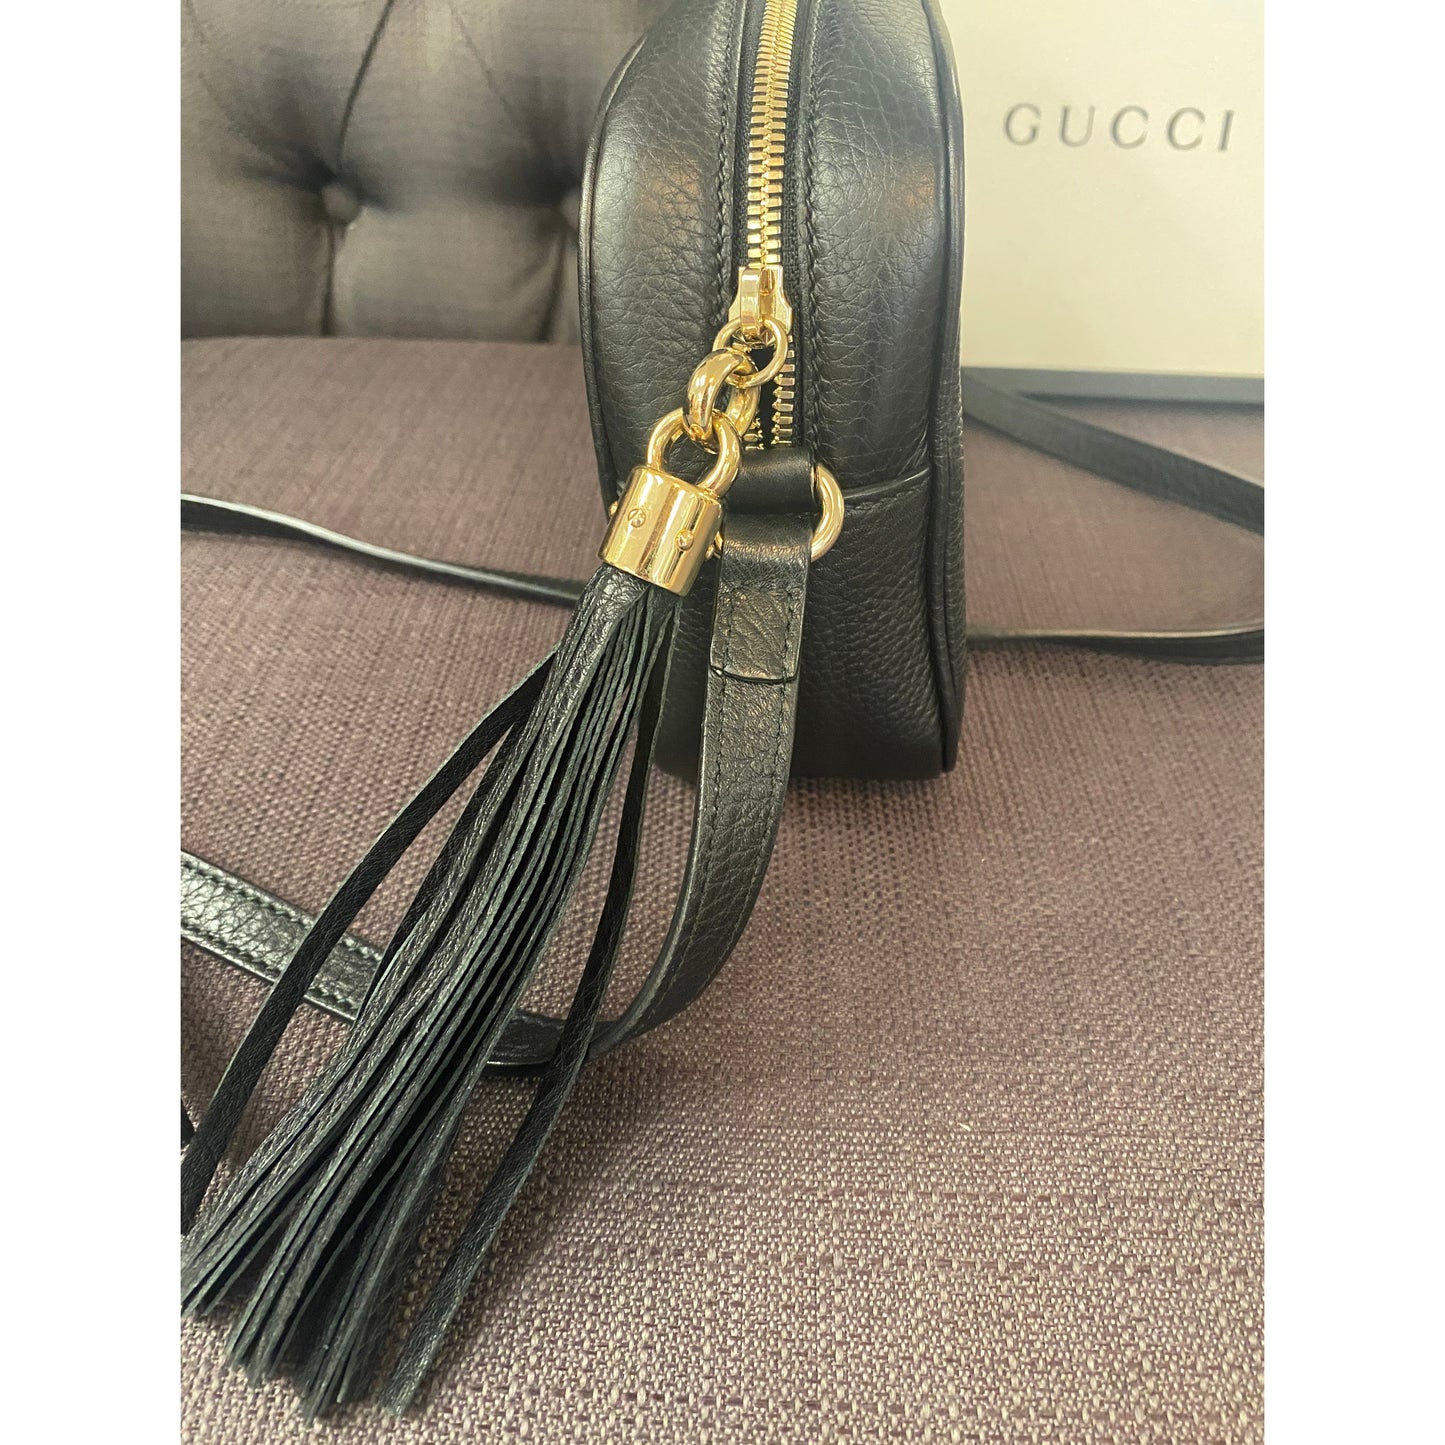 Gucci Soho Leather Bag Black